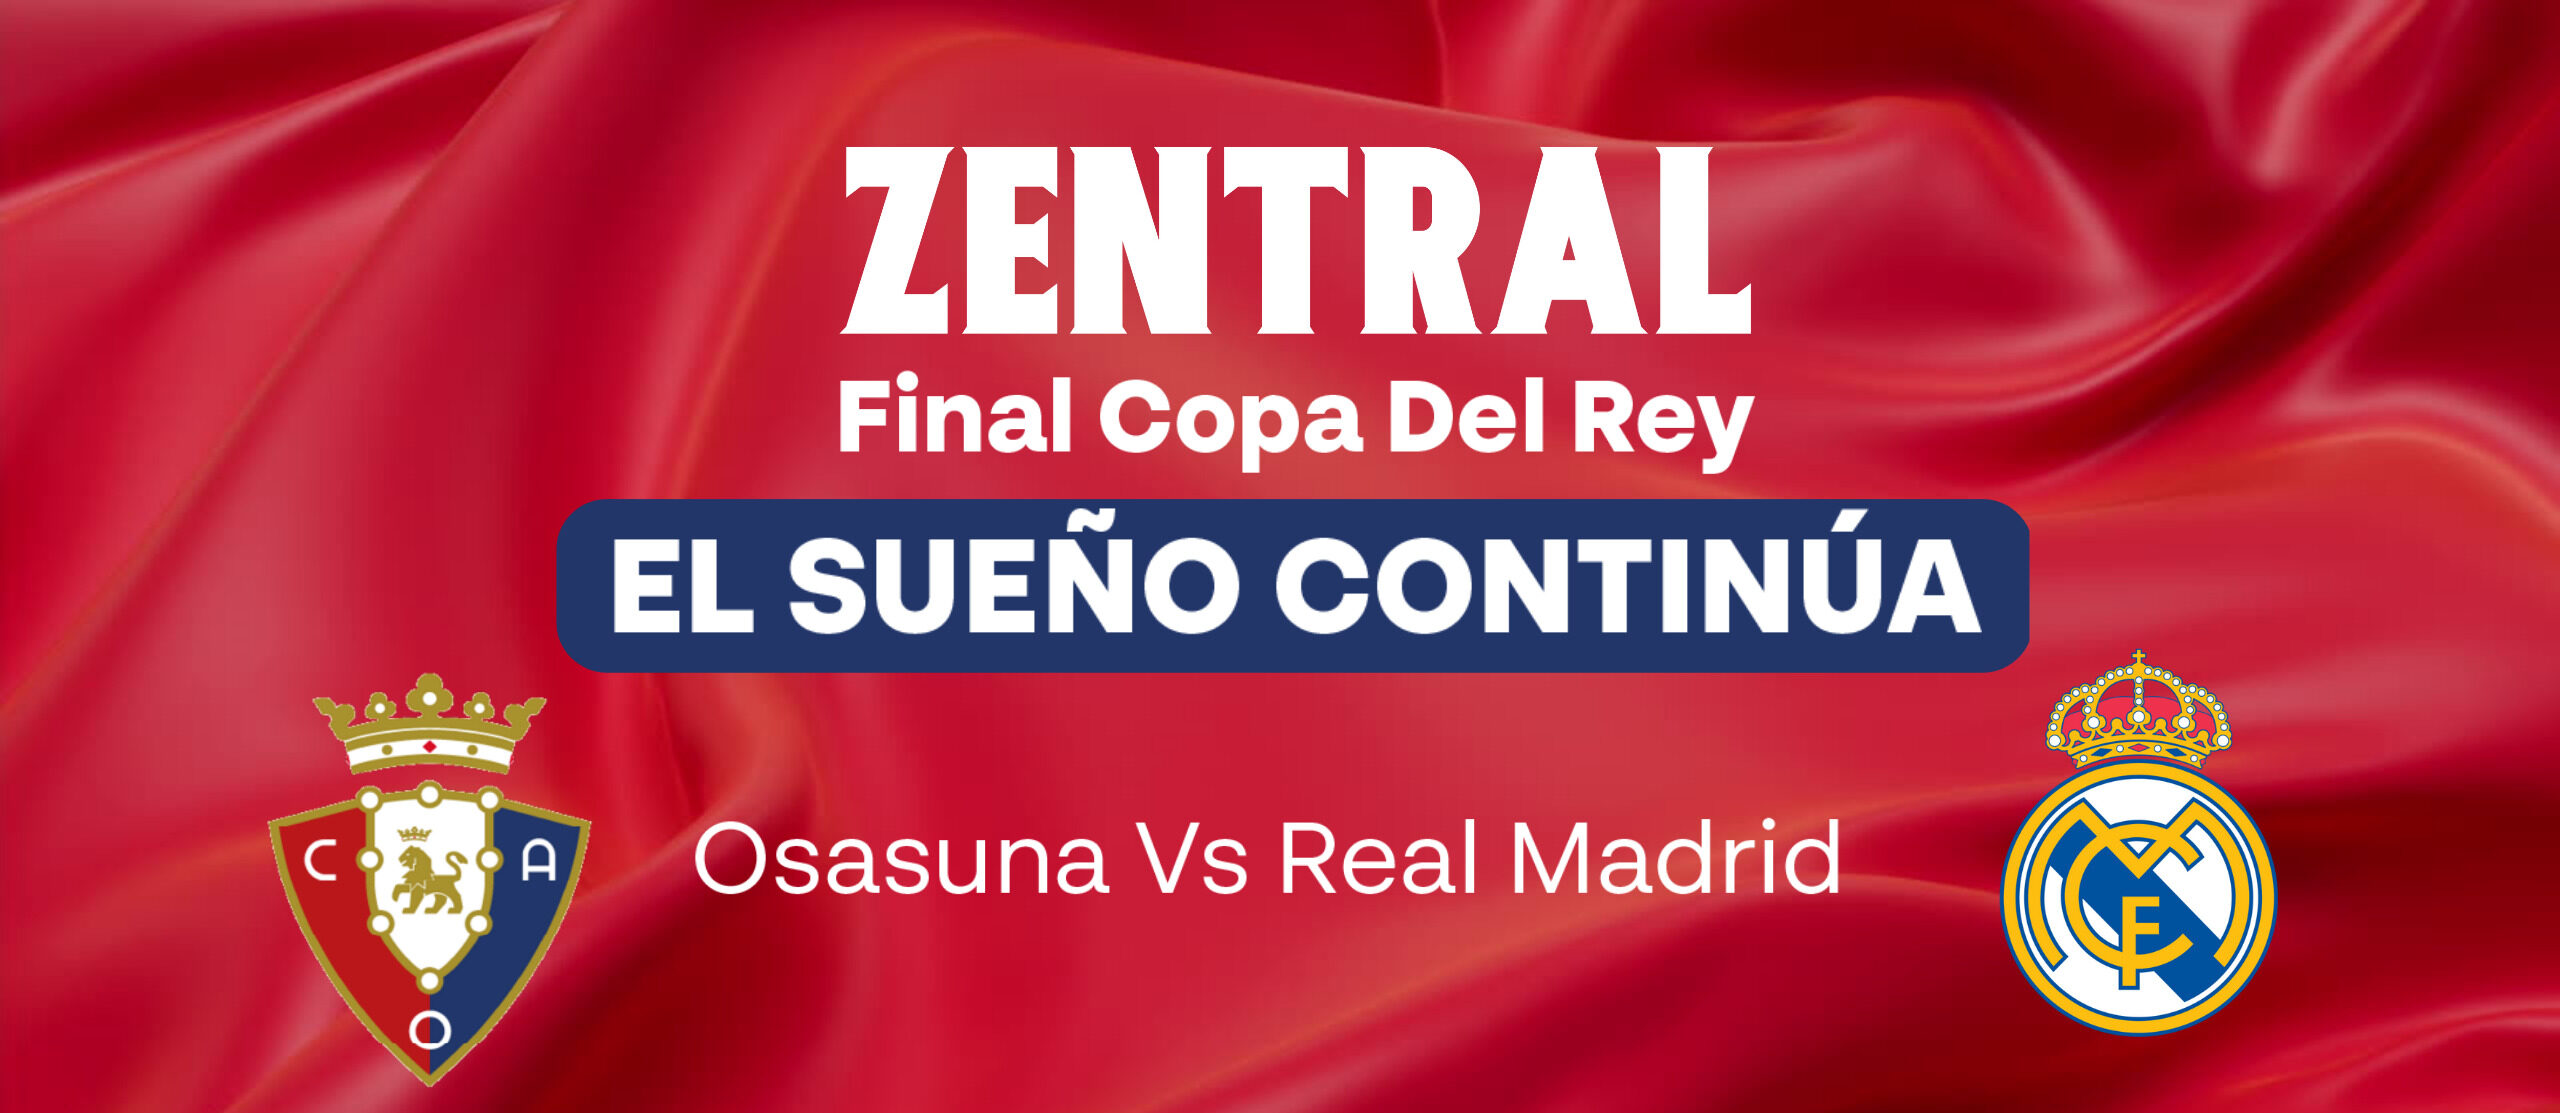 FINAL COPA DEL REY (ZENTRAL) – OSASUNA – REAL MADRID